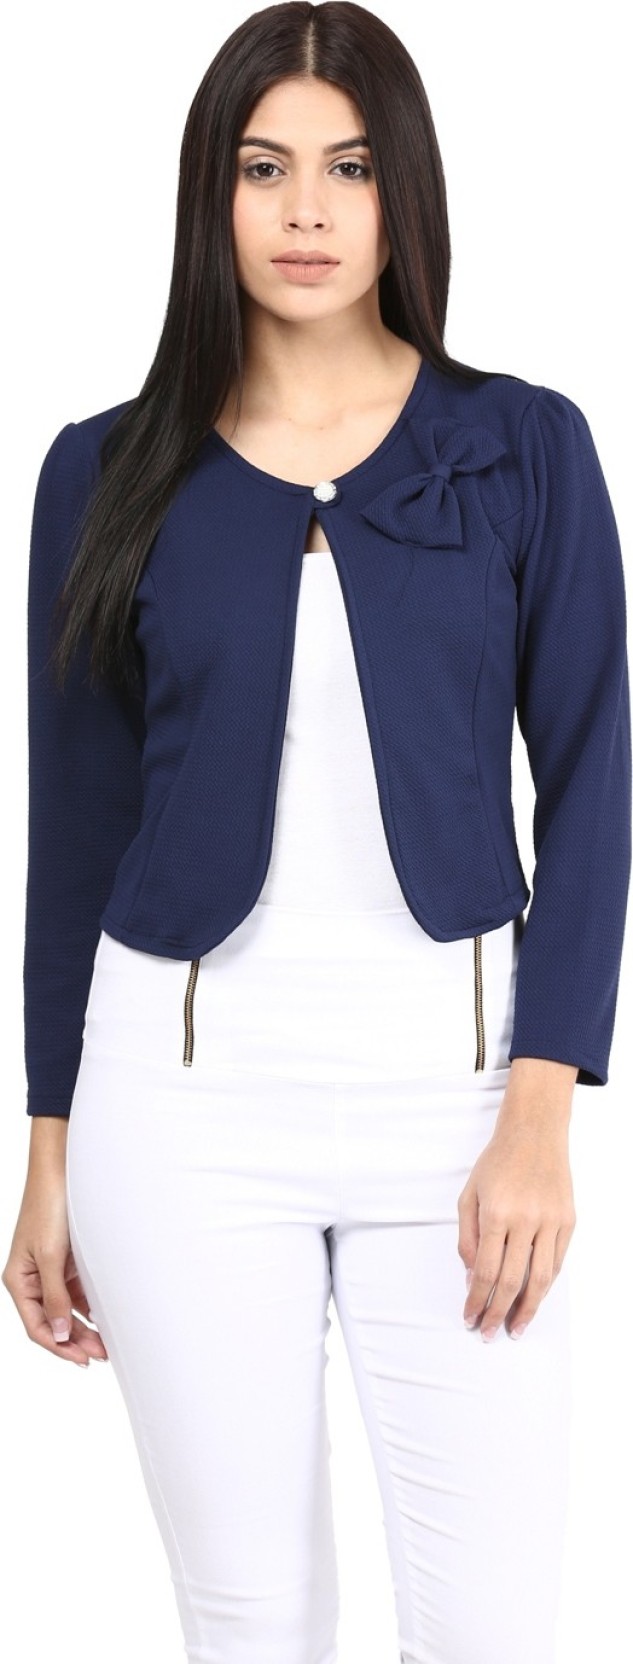 Mayra Full Sleeve Solid Women's Jacket - Buy Navy Blue Mayra Full ...